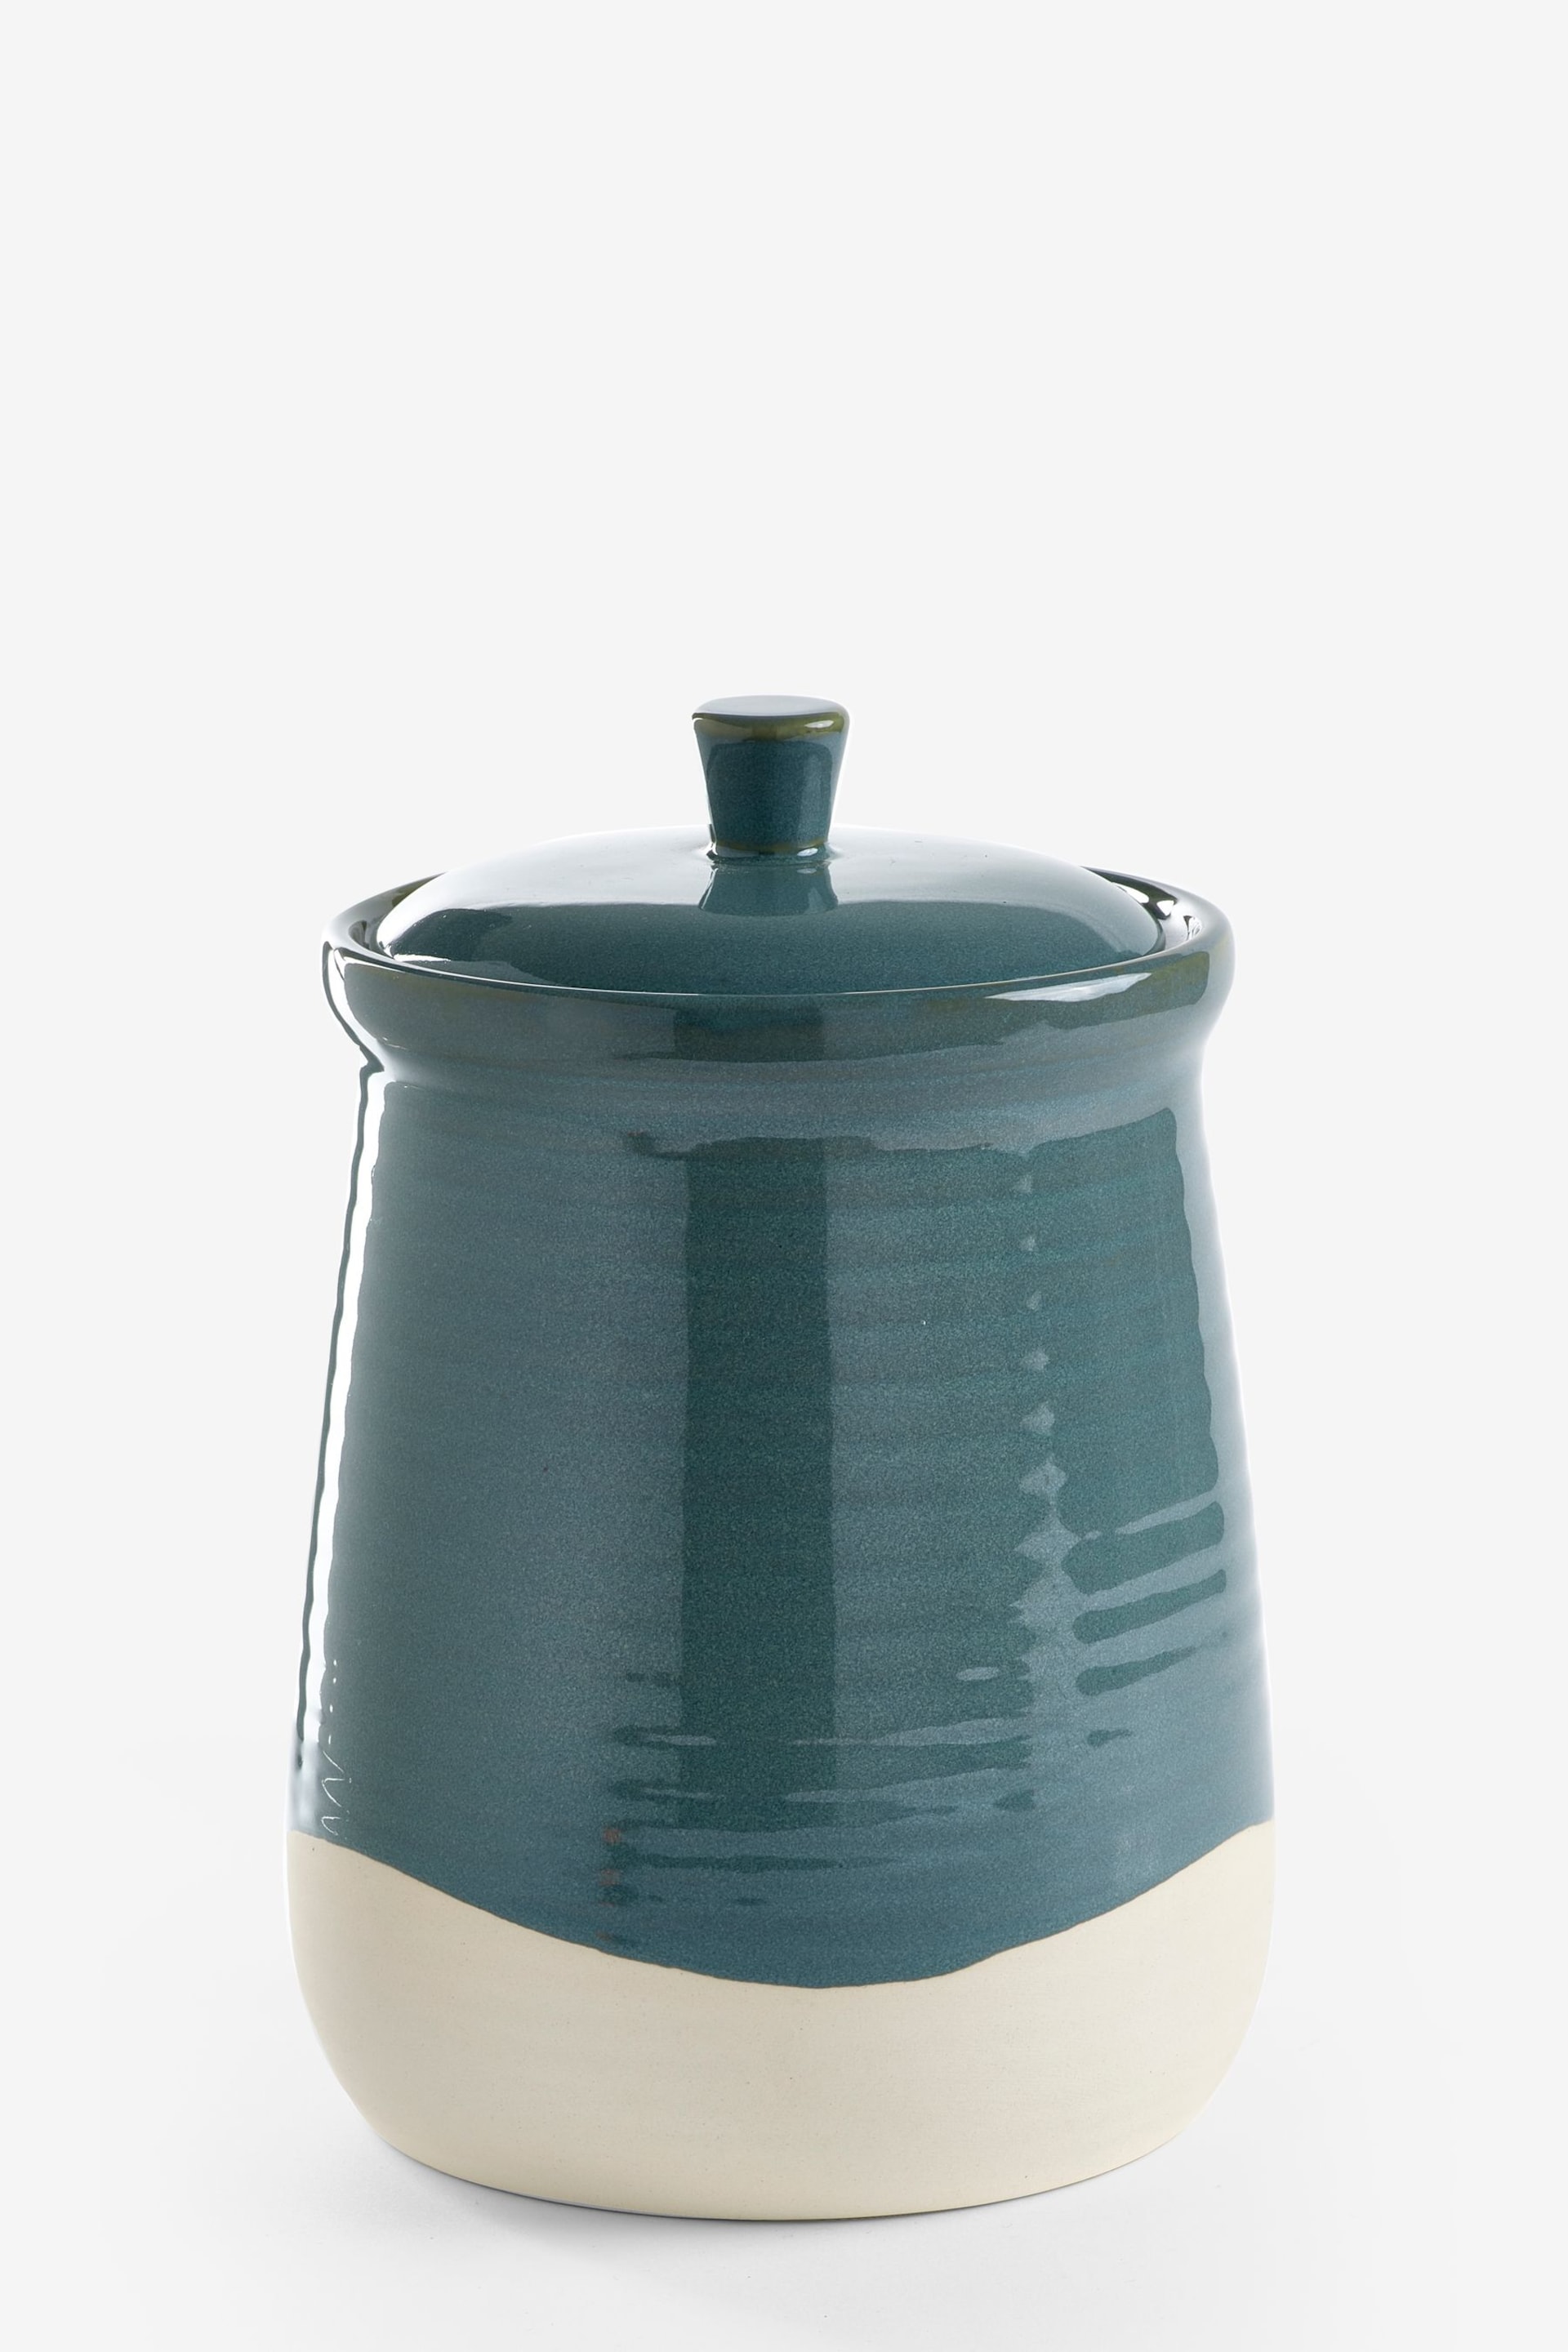 Teal Blue Wolton Biscuit Jar - Image 3 of 3